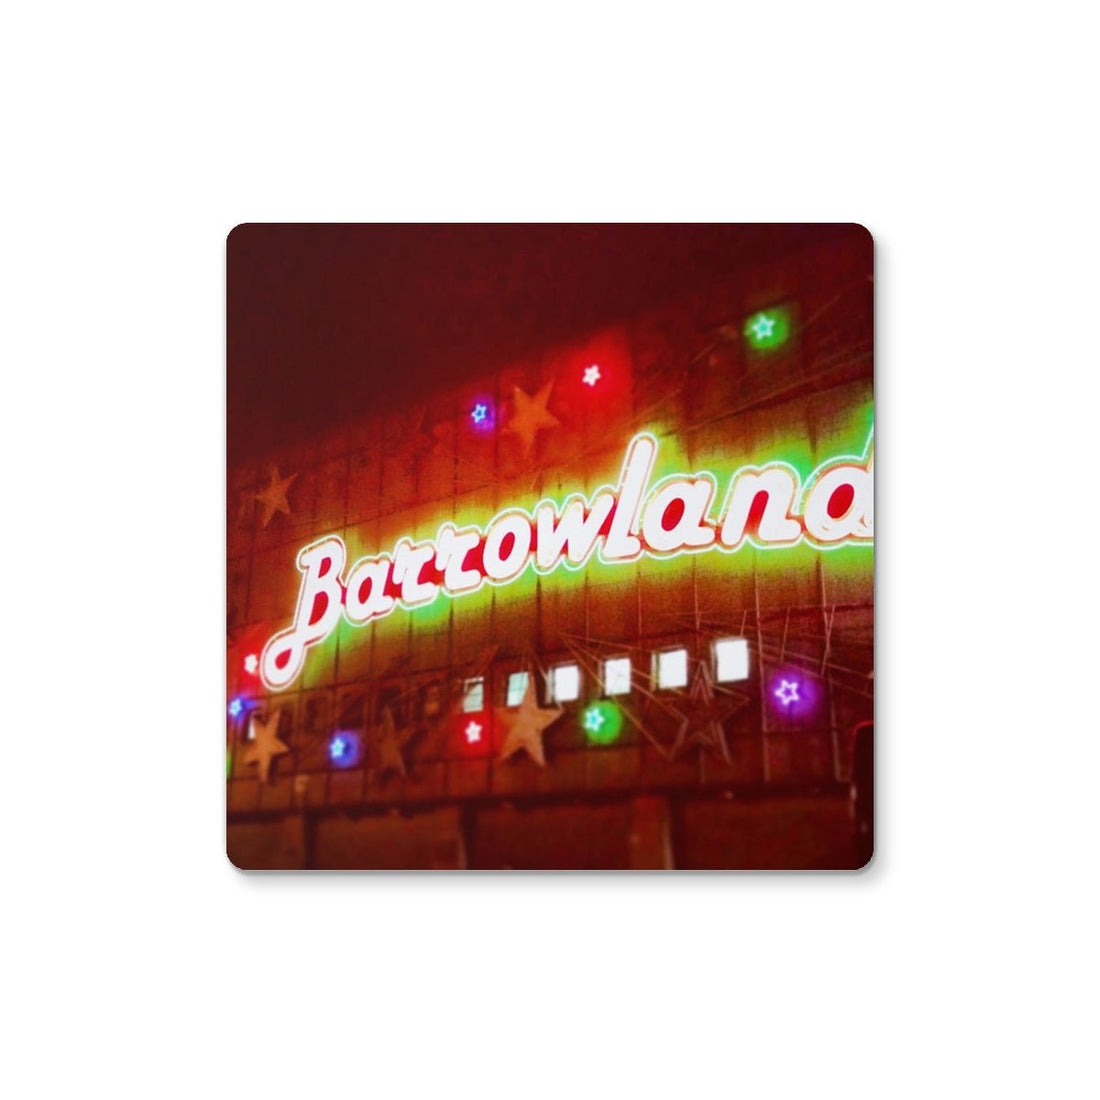 A Neon Glasgow Barrowlands Art Gifts Coaster